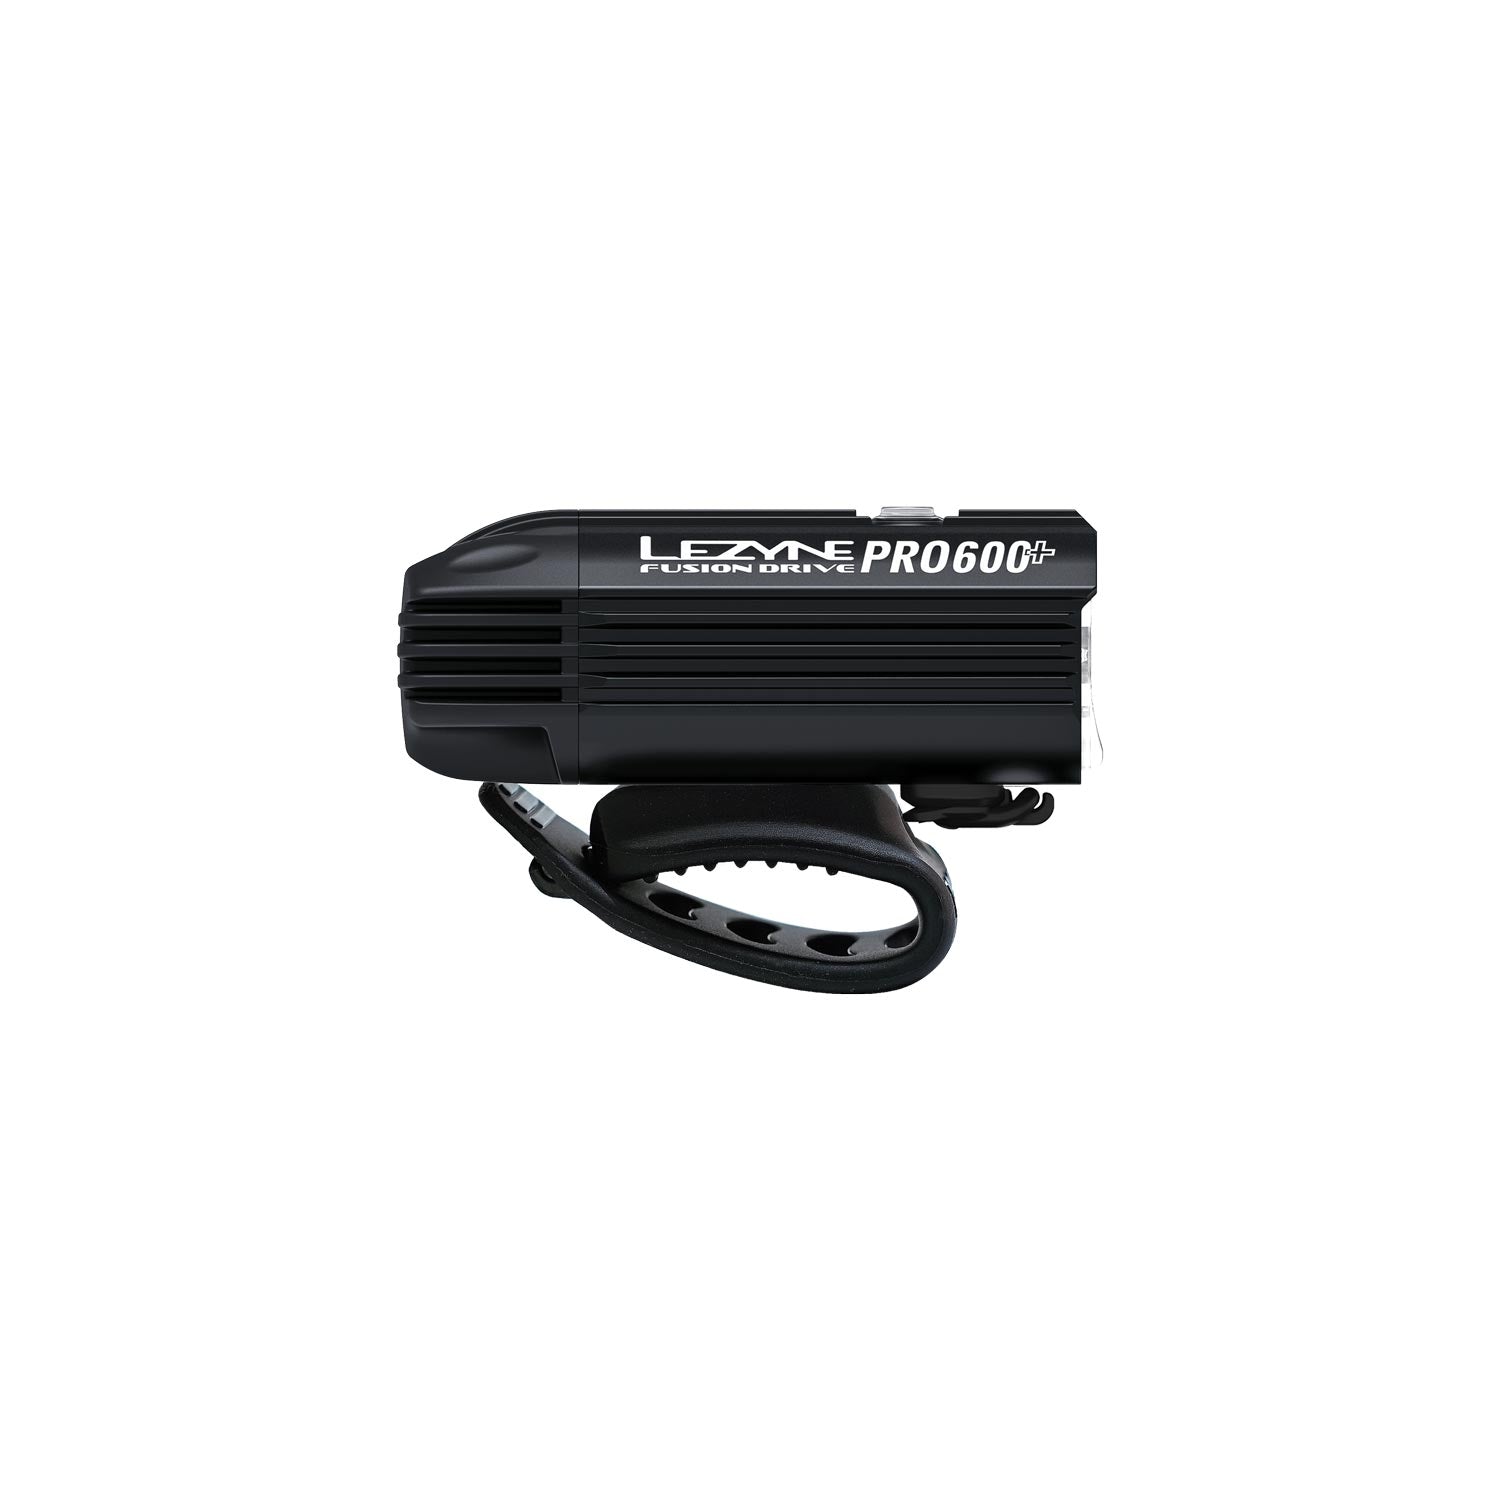 Fusion Drive Pro 600+ front bike light